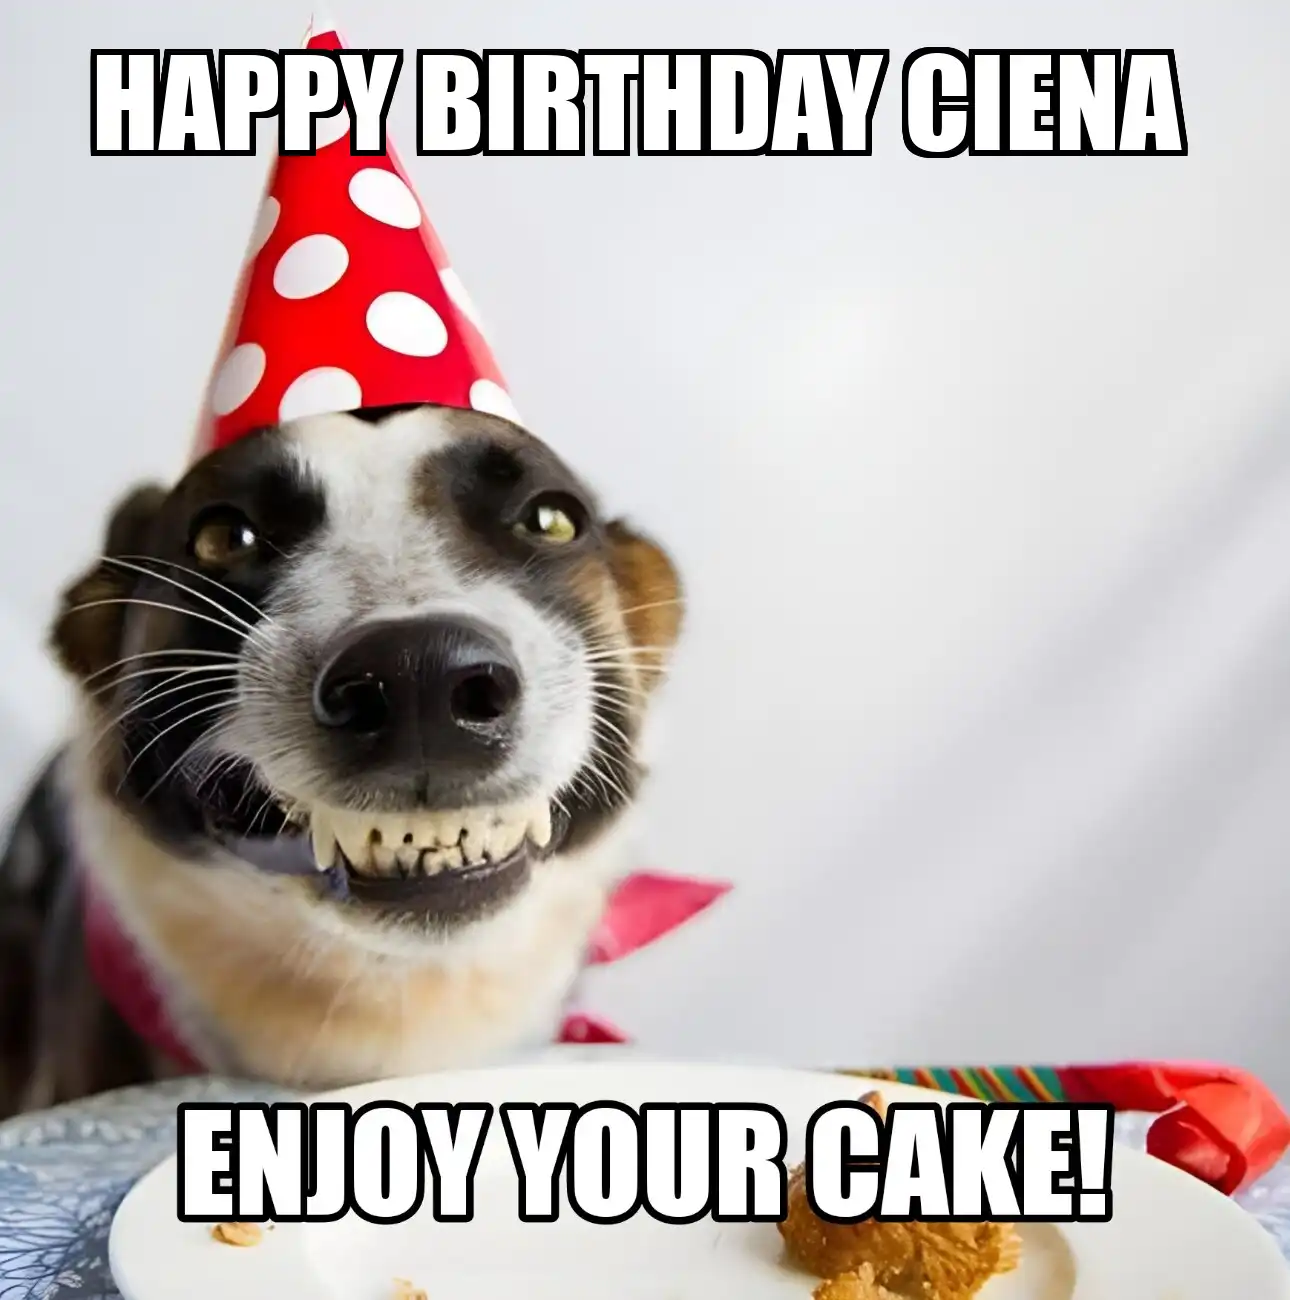 Happy Birthday Ciena Enjoy Your Cake Dog Meme